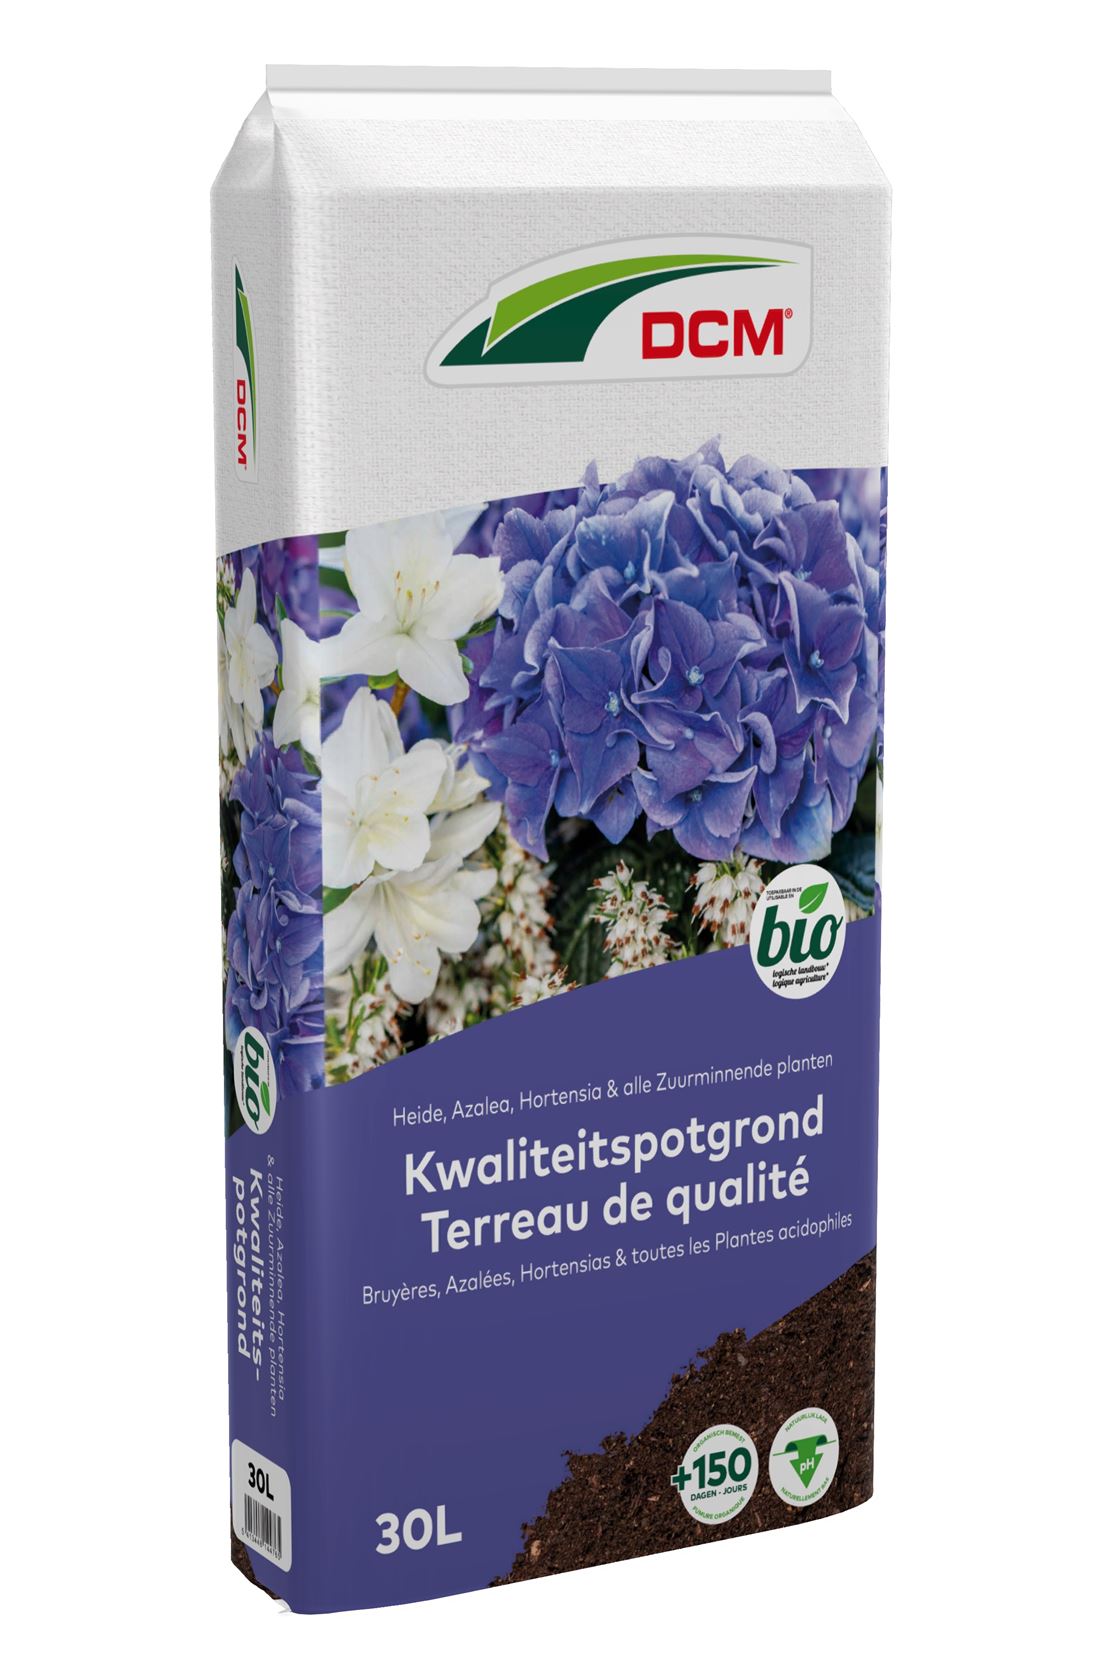 DCM Potgrond voor Heide, Azalea, Hortensia & alle Zuurminnende Planten 30L